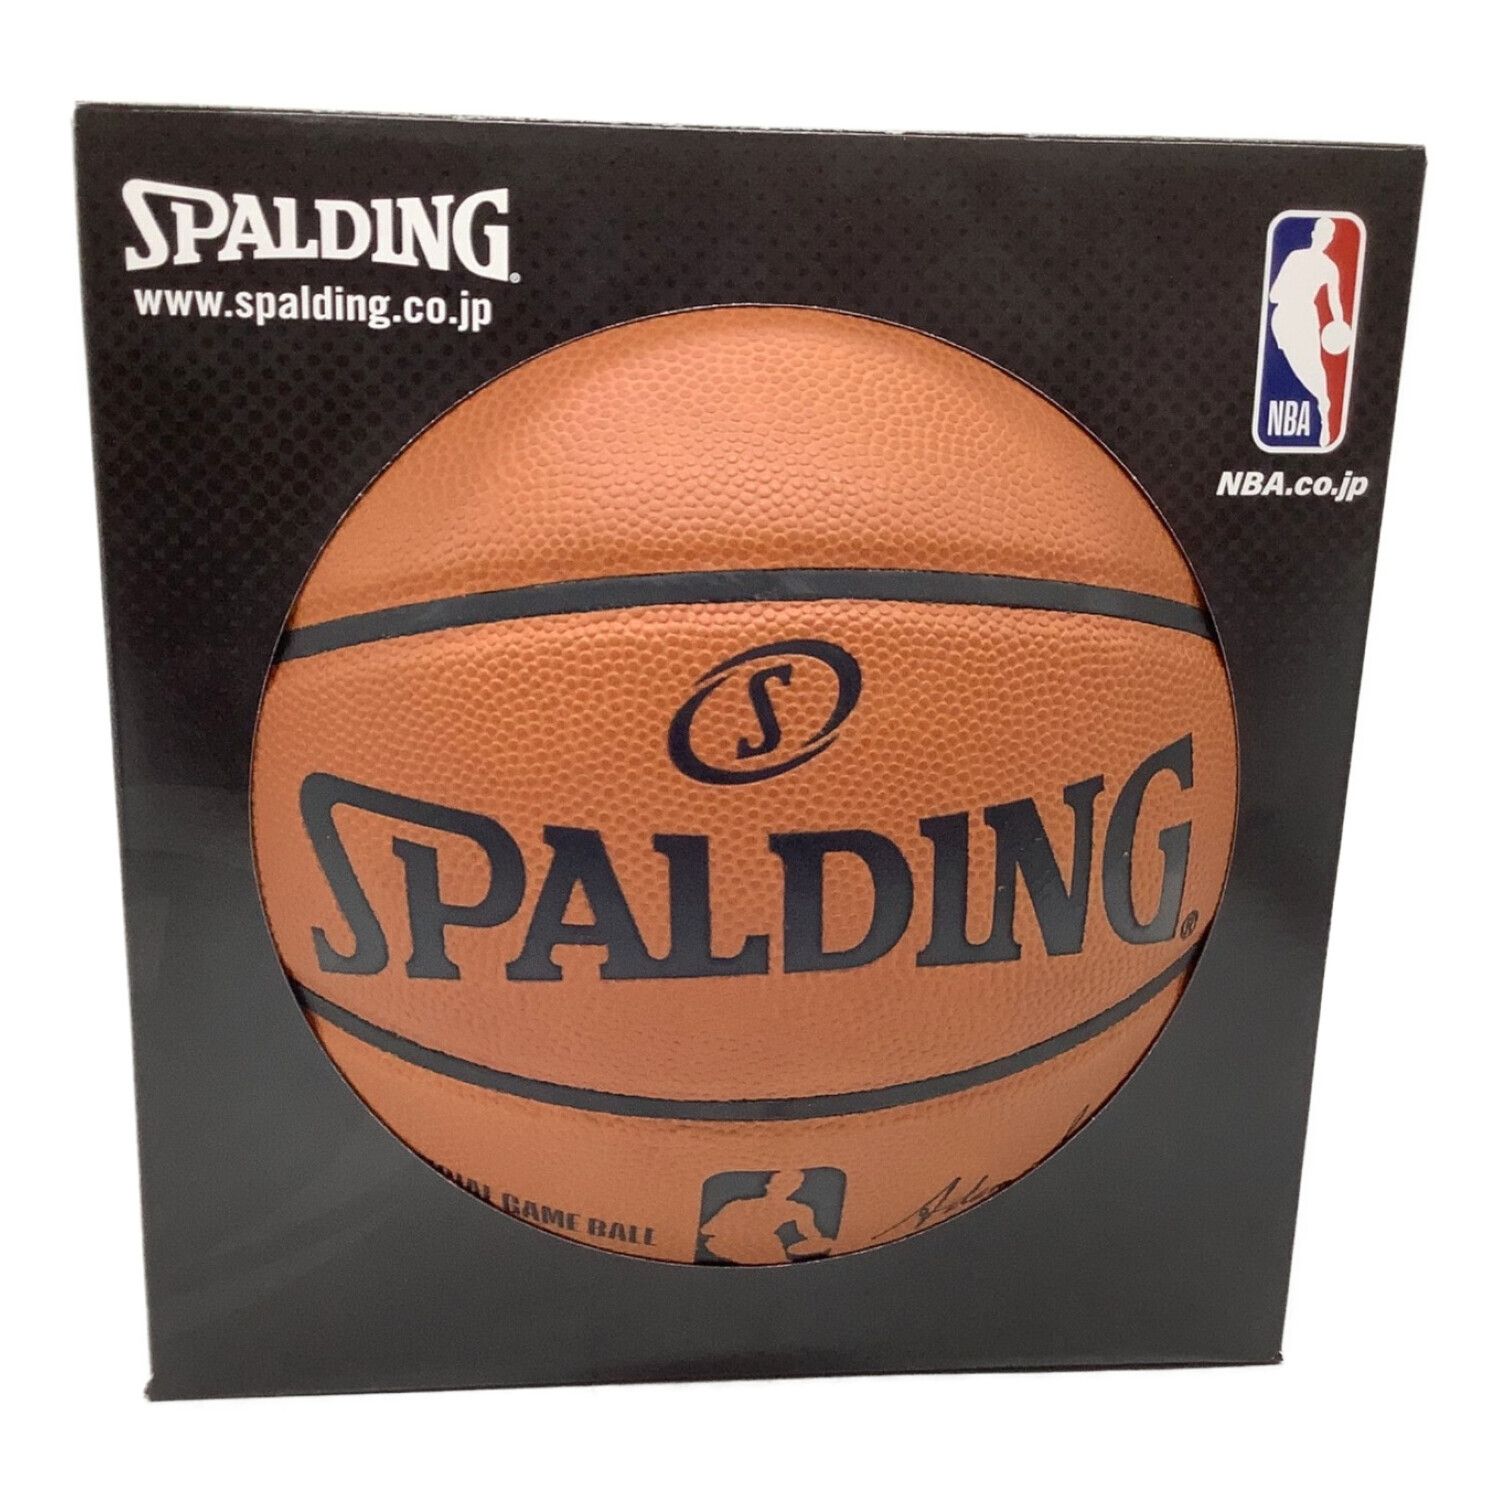 SPALDING (スポルディング) バスケットボール 7号 NBA公式試合球 